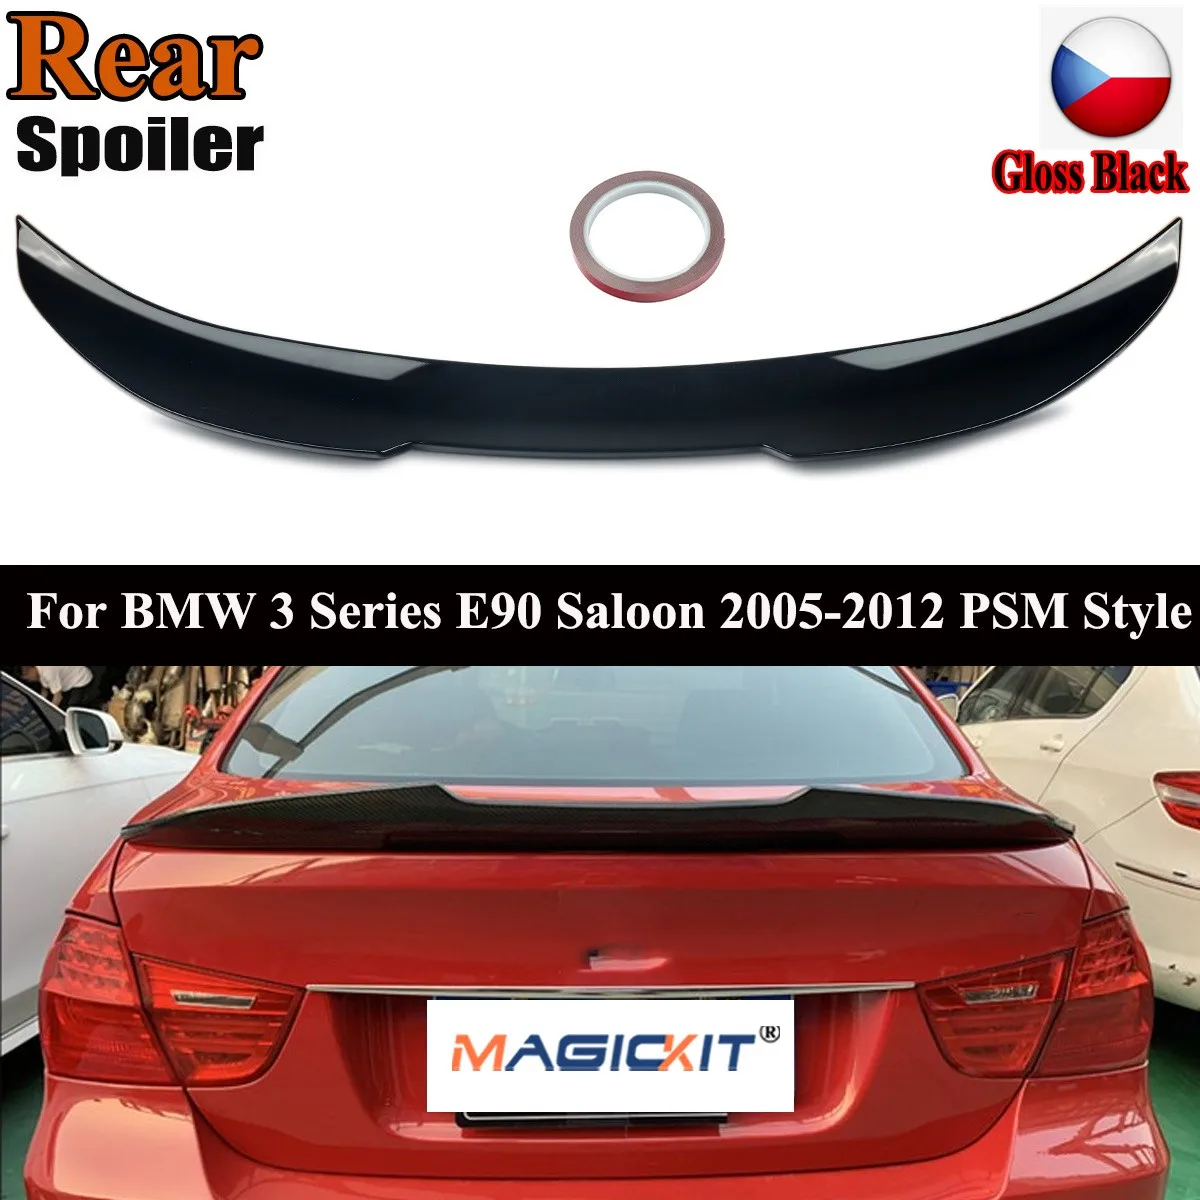 

MagicKit FOR 2006-12 BMW E90 3 SERIES M3 SEDAN PSM STYLE Closs Black TRUNK SPOILER WING